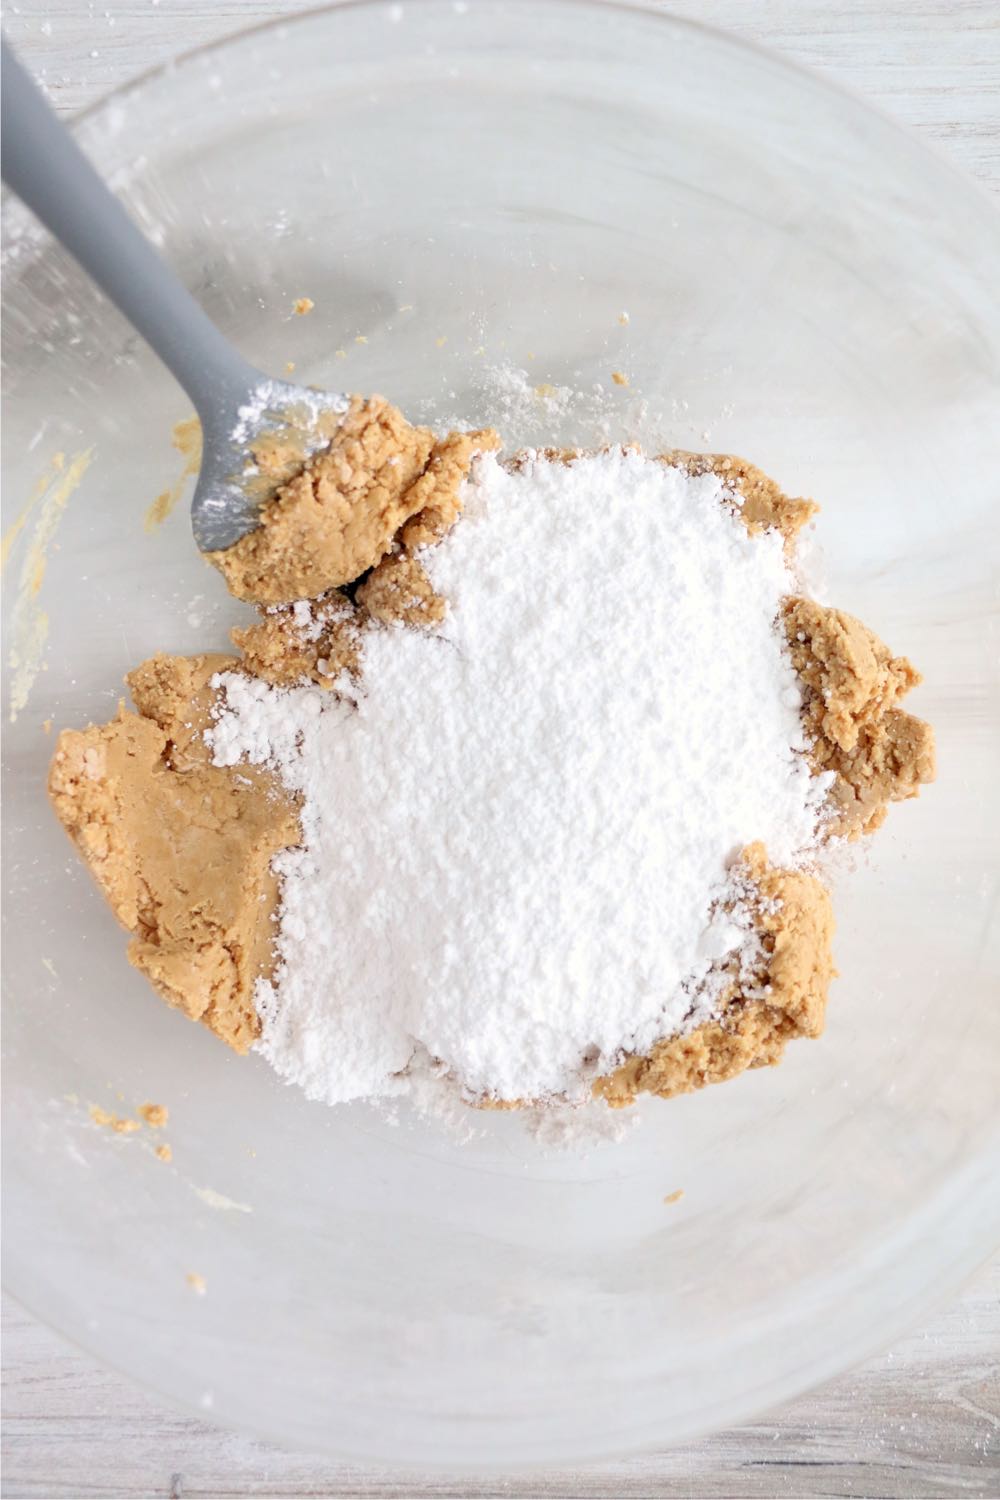 Adding powdered sugar to dough mixture